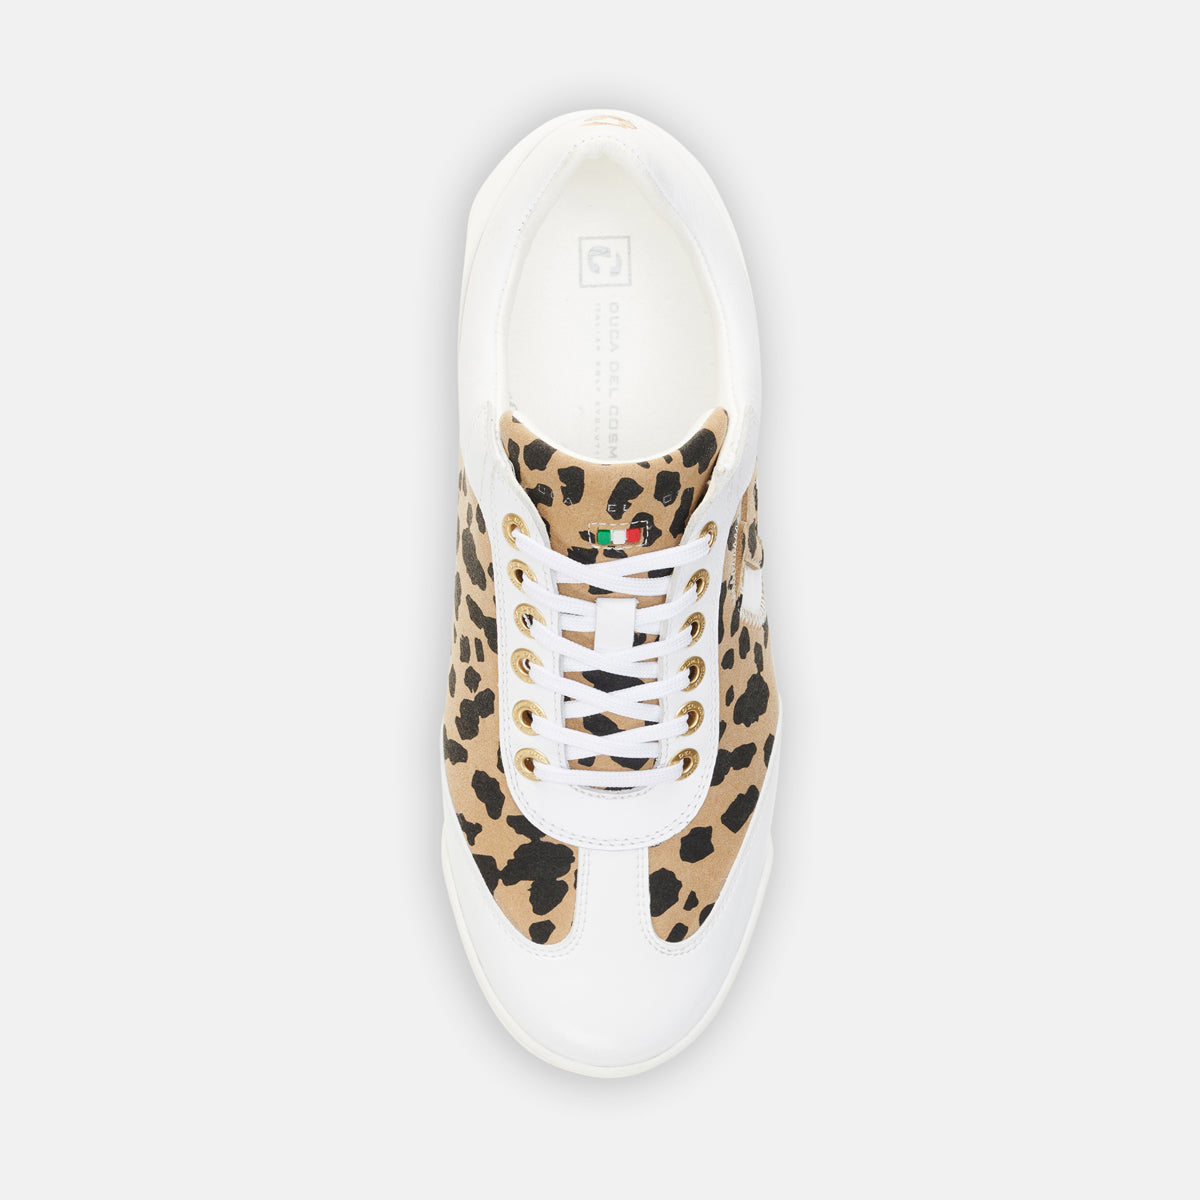 King Cheetah Whute Women's Golf shoe fully waterproof with animal print from duca del cosma